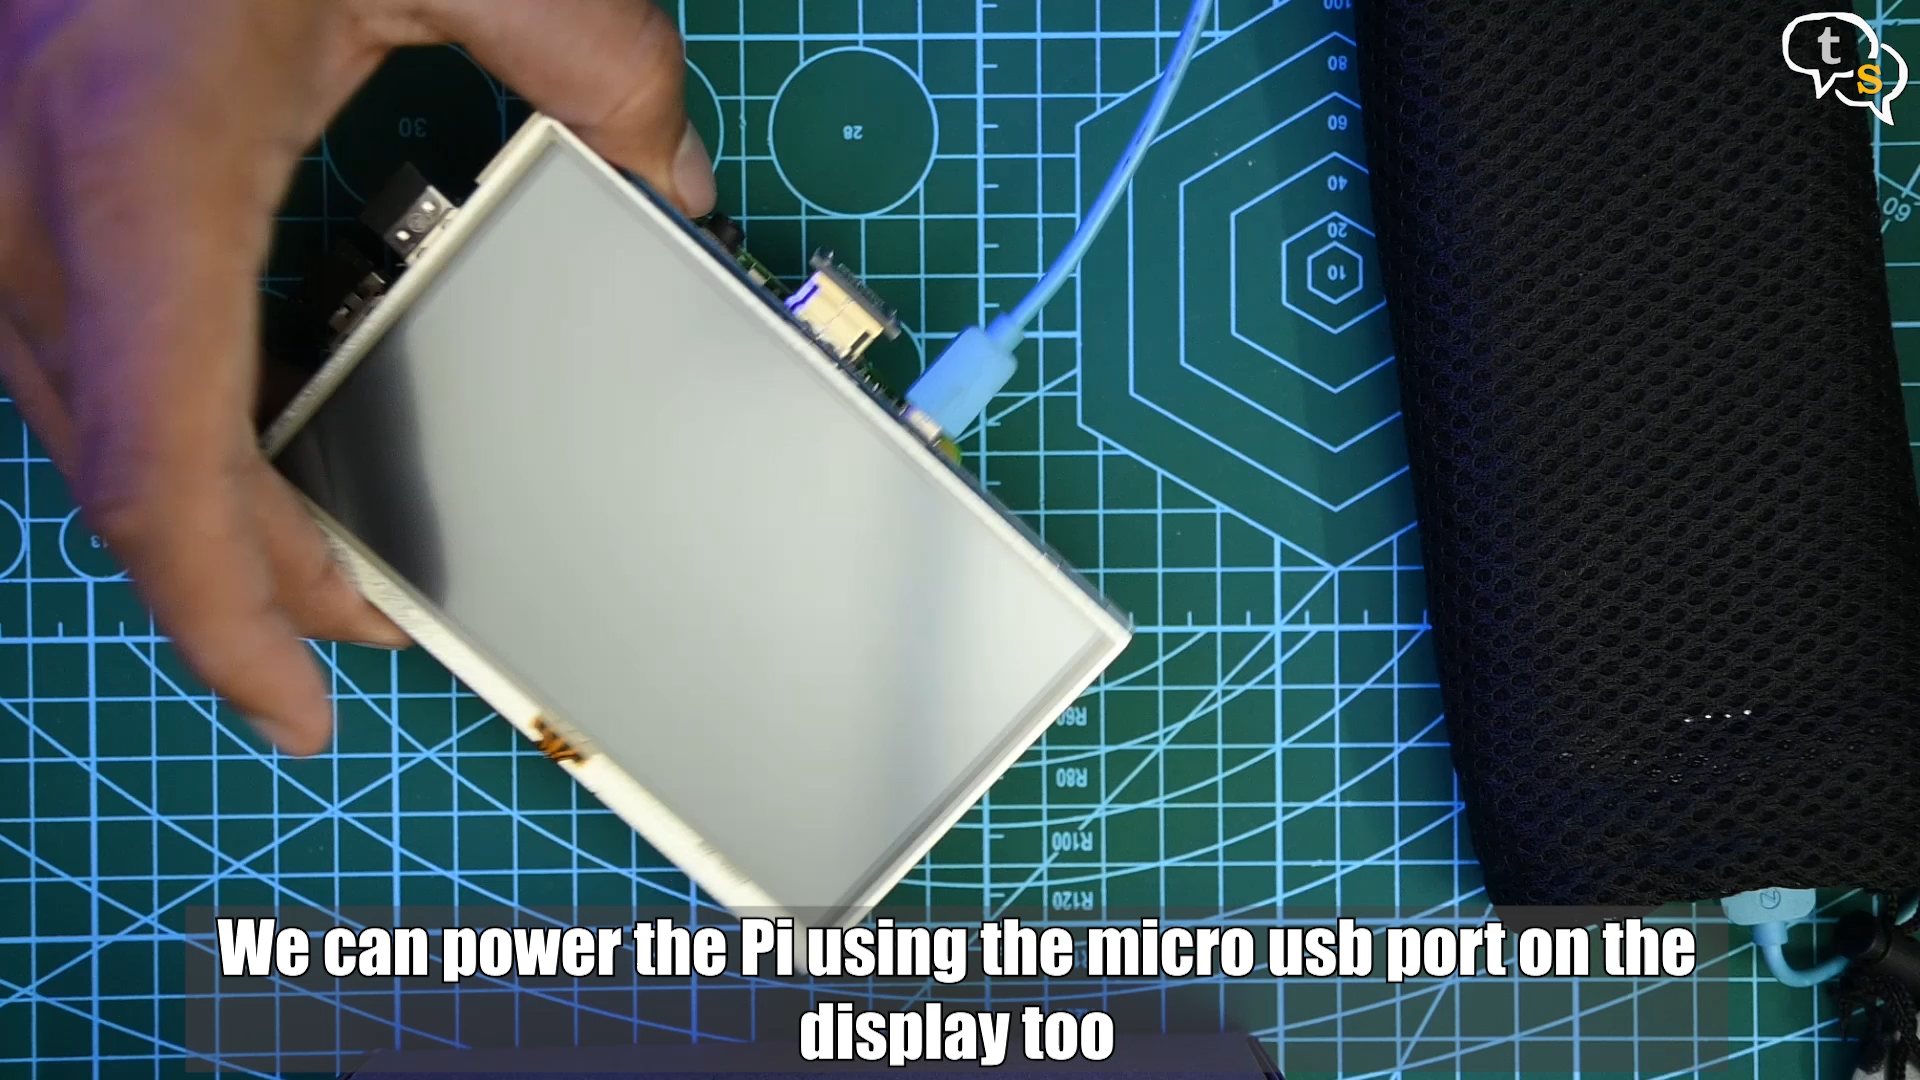 Raspberry Pi, power via 5 inch touchscreen display